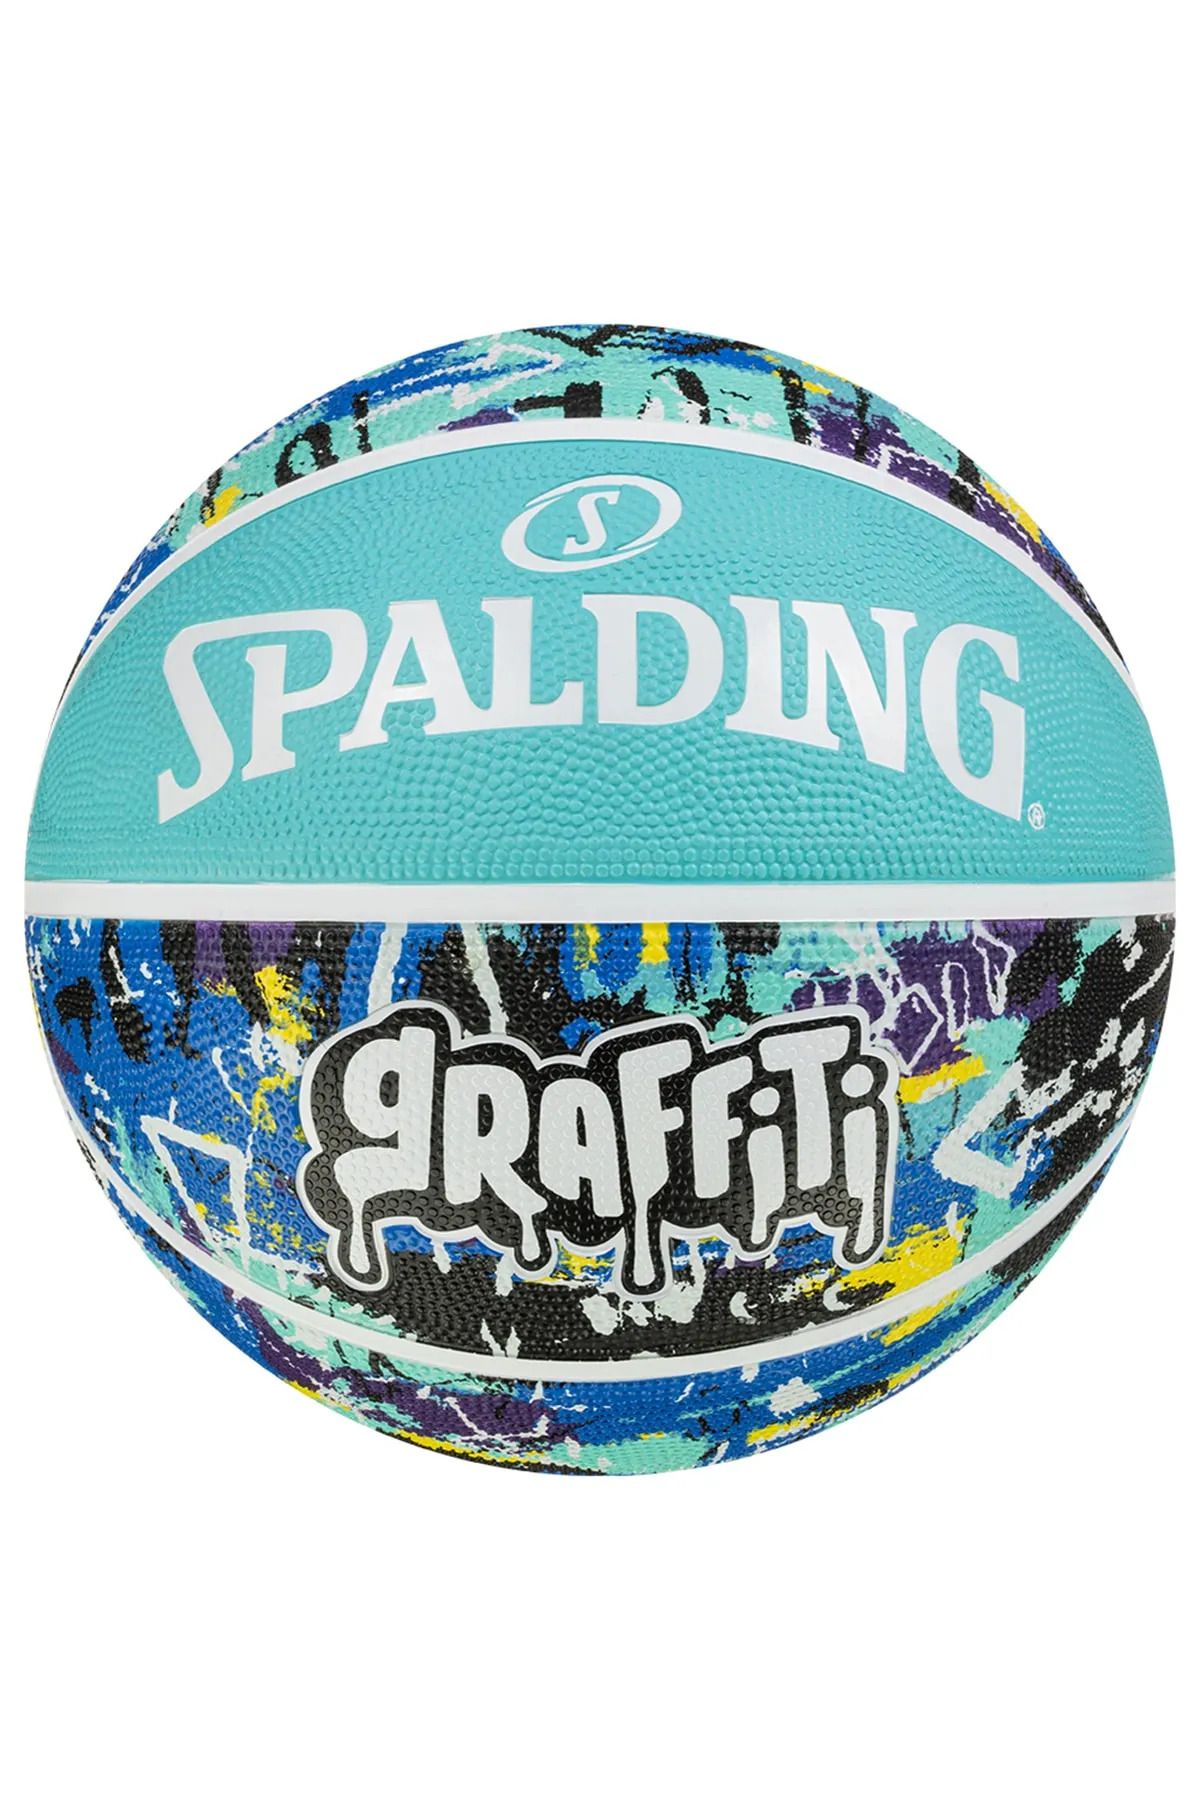 TOCSPORTS Turkuaz Spl Grafiti Model Basketbol Topu - No 7 - Pompa Dahil